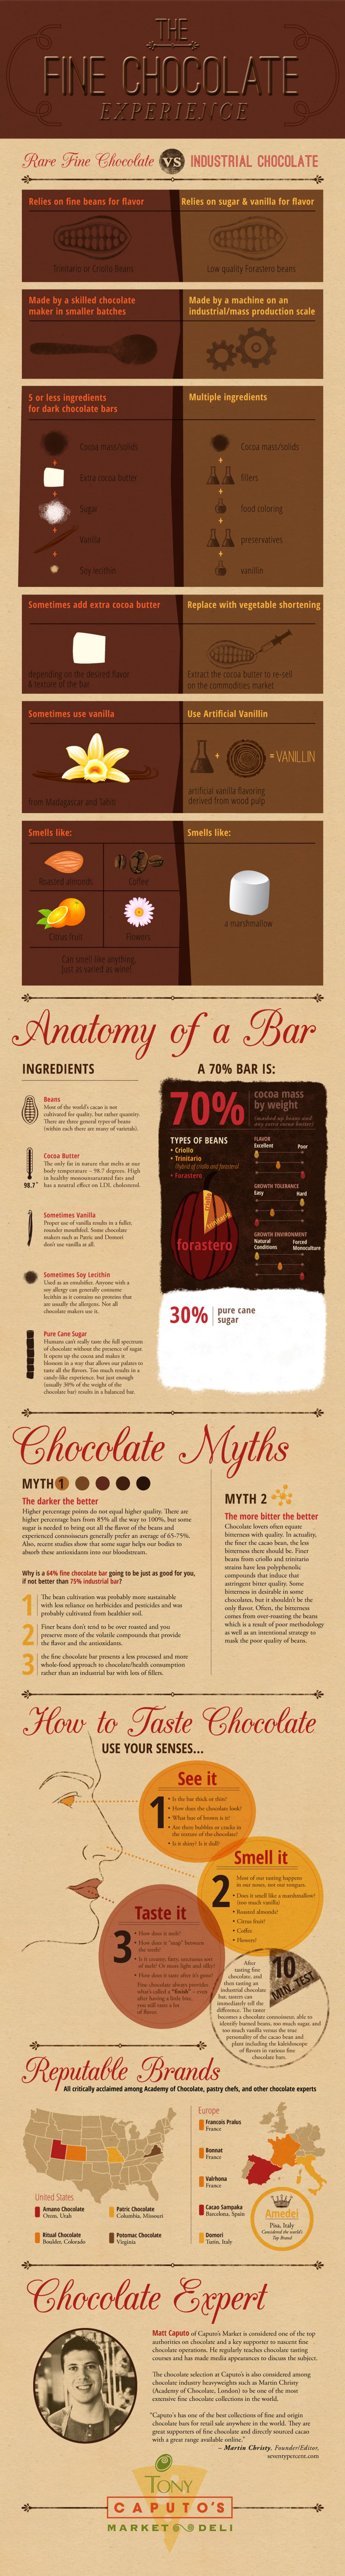 Understand High Quality Chocolate